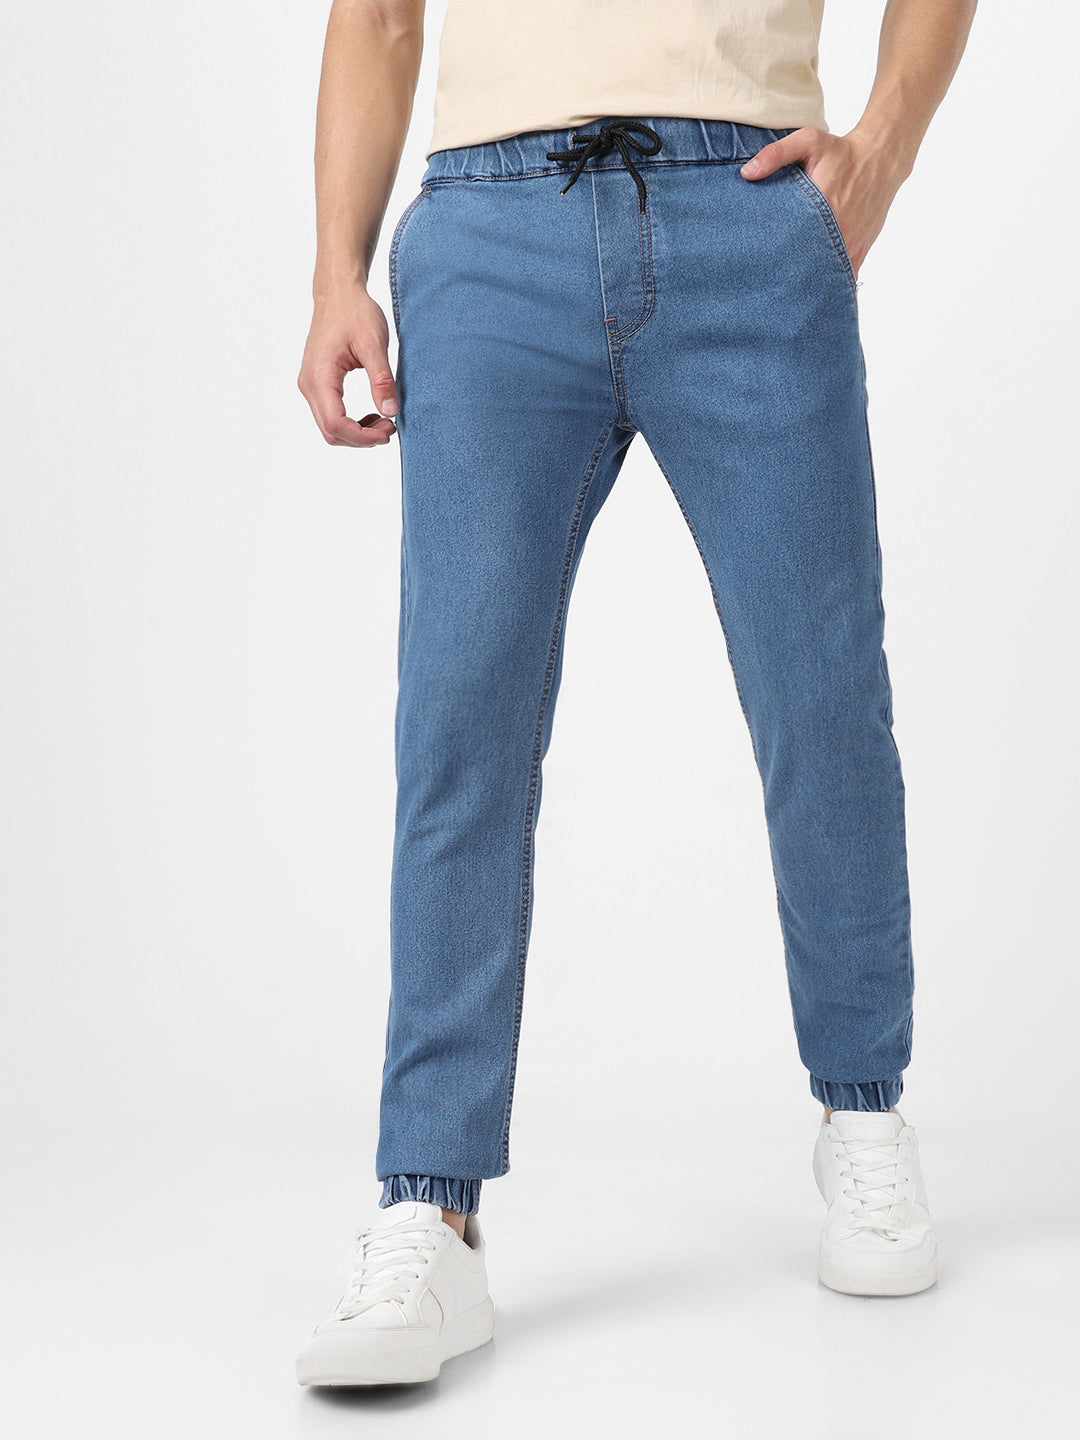 Men's Light Blue Jogger Jeans Slim Fit Stretch